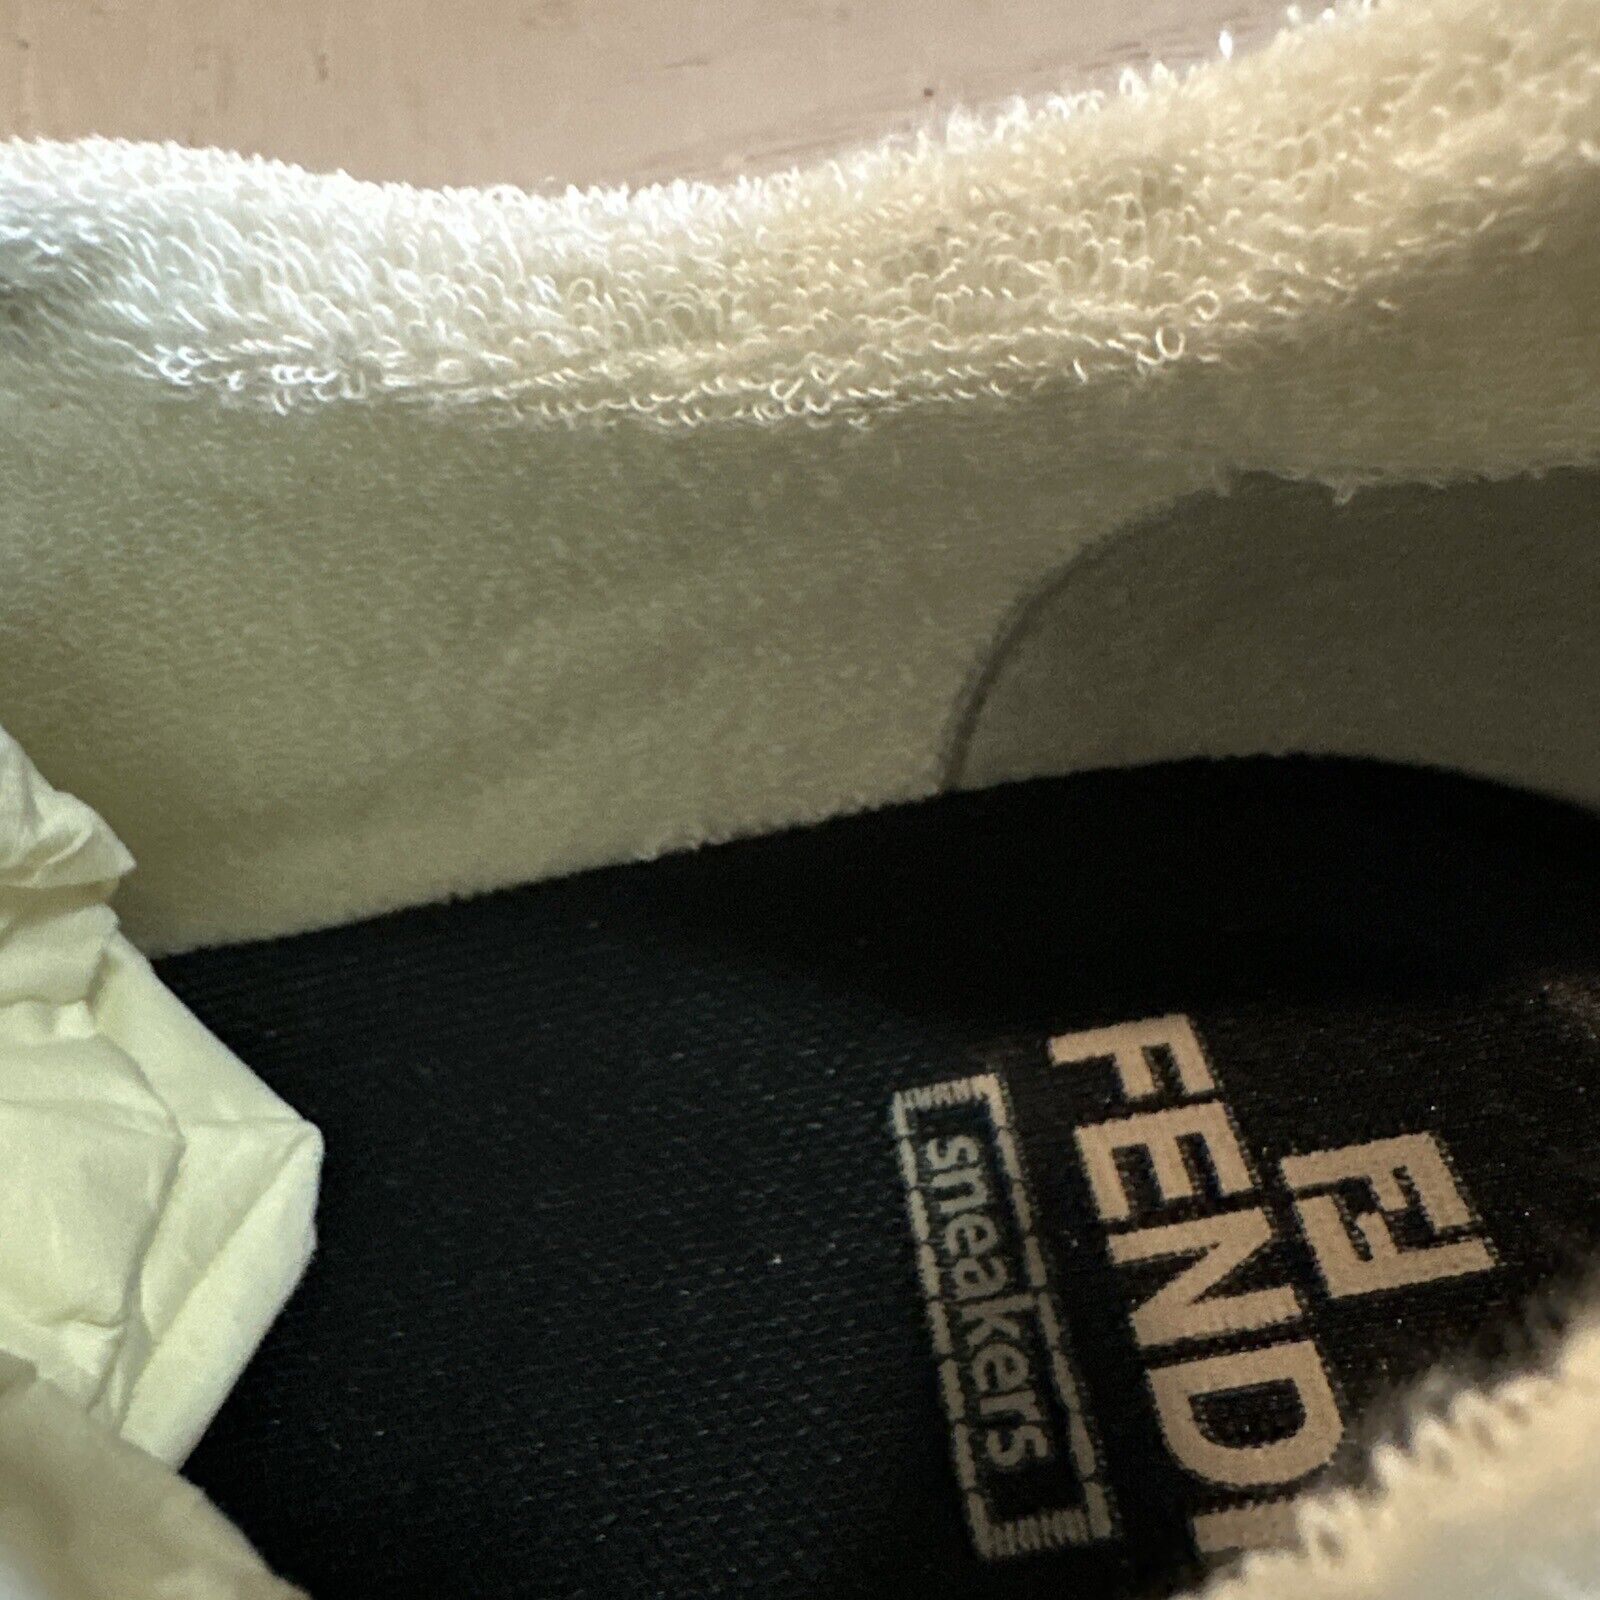 NIB $930 Fendi Men FF Fendi Leather/Fabric Iconic Sneakers Black/Red 11 US/10 UK